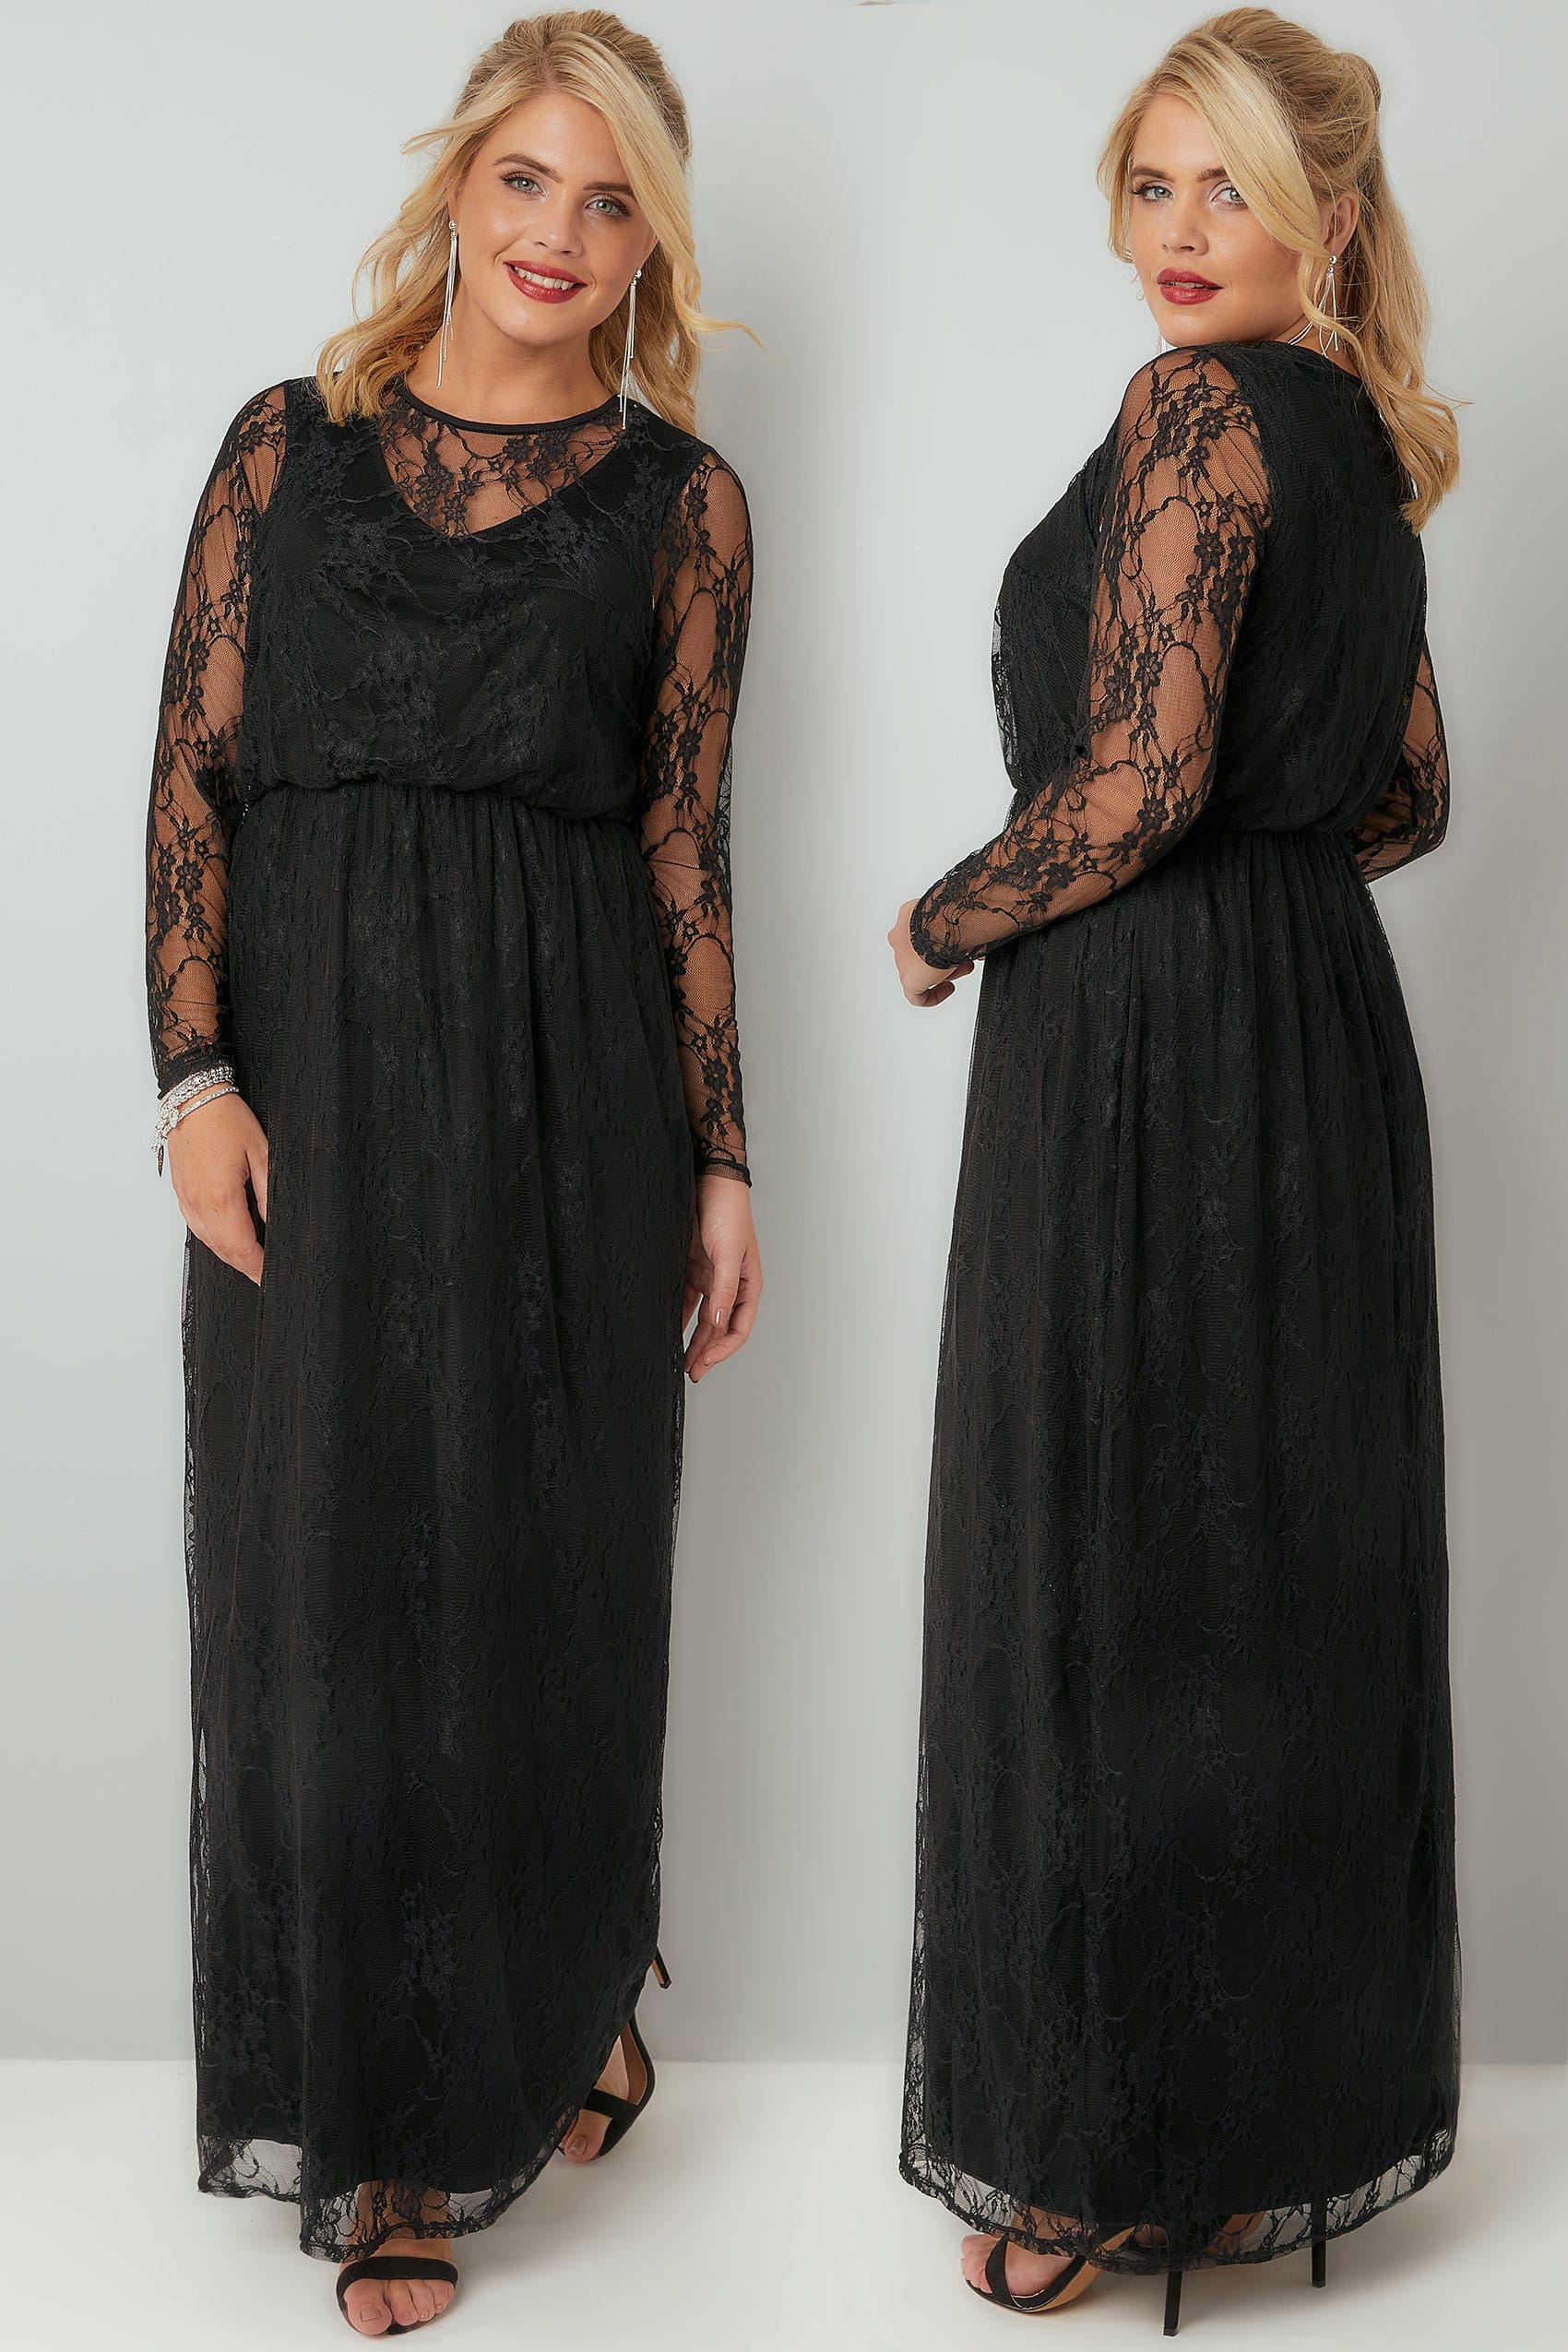 Black Lace Long Sleeve Maxi Dress With Elasticated Waist, Plus size 16 ...